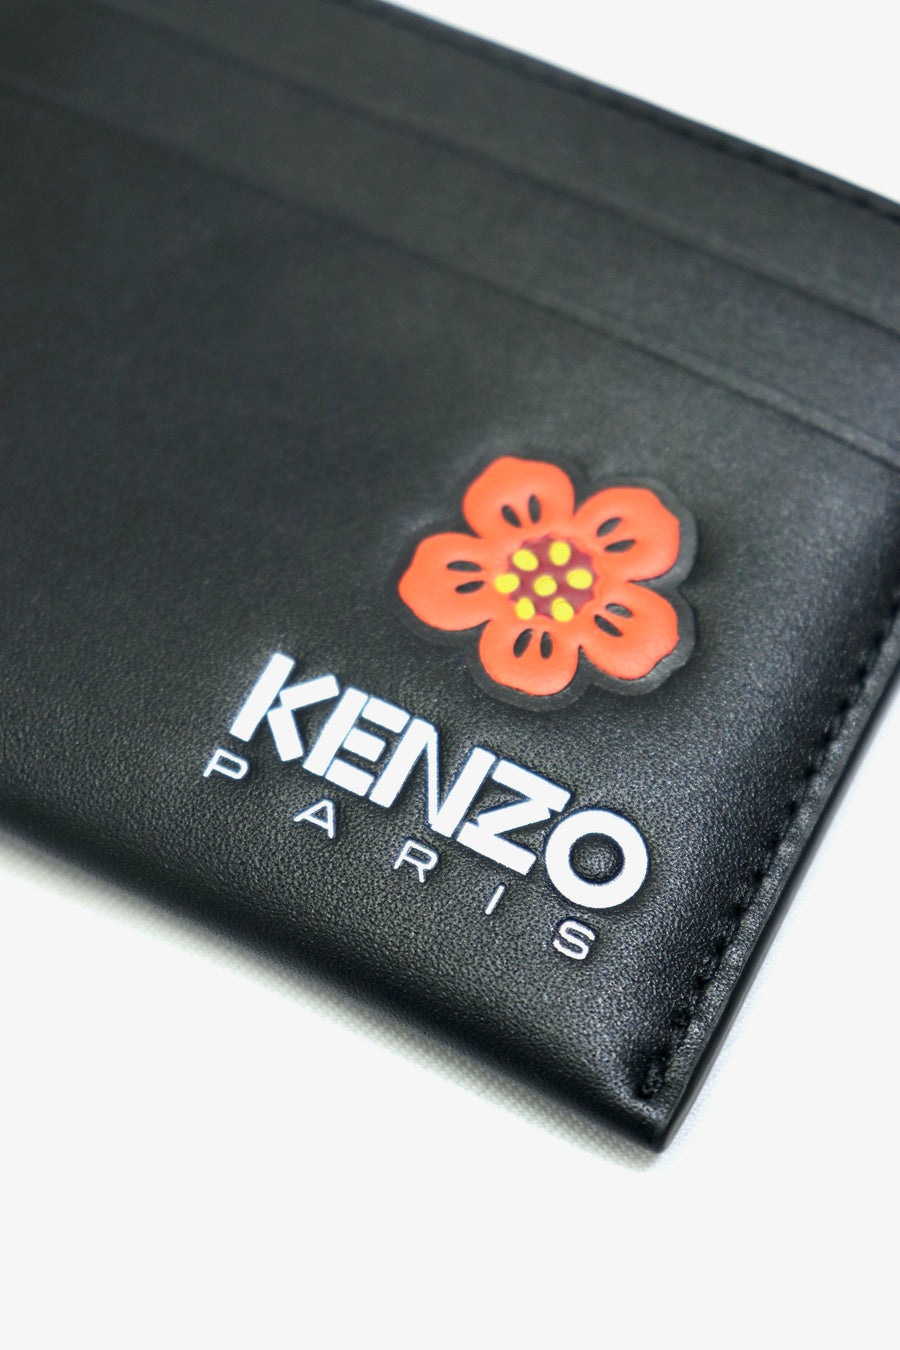 KENZO  Card Holder(Smooth calf)